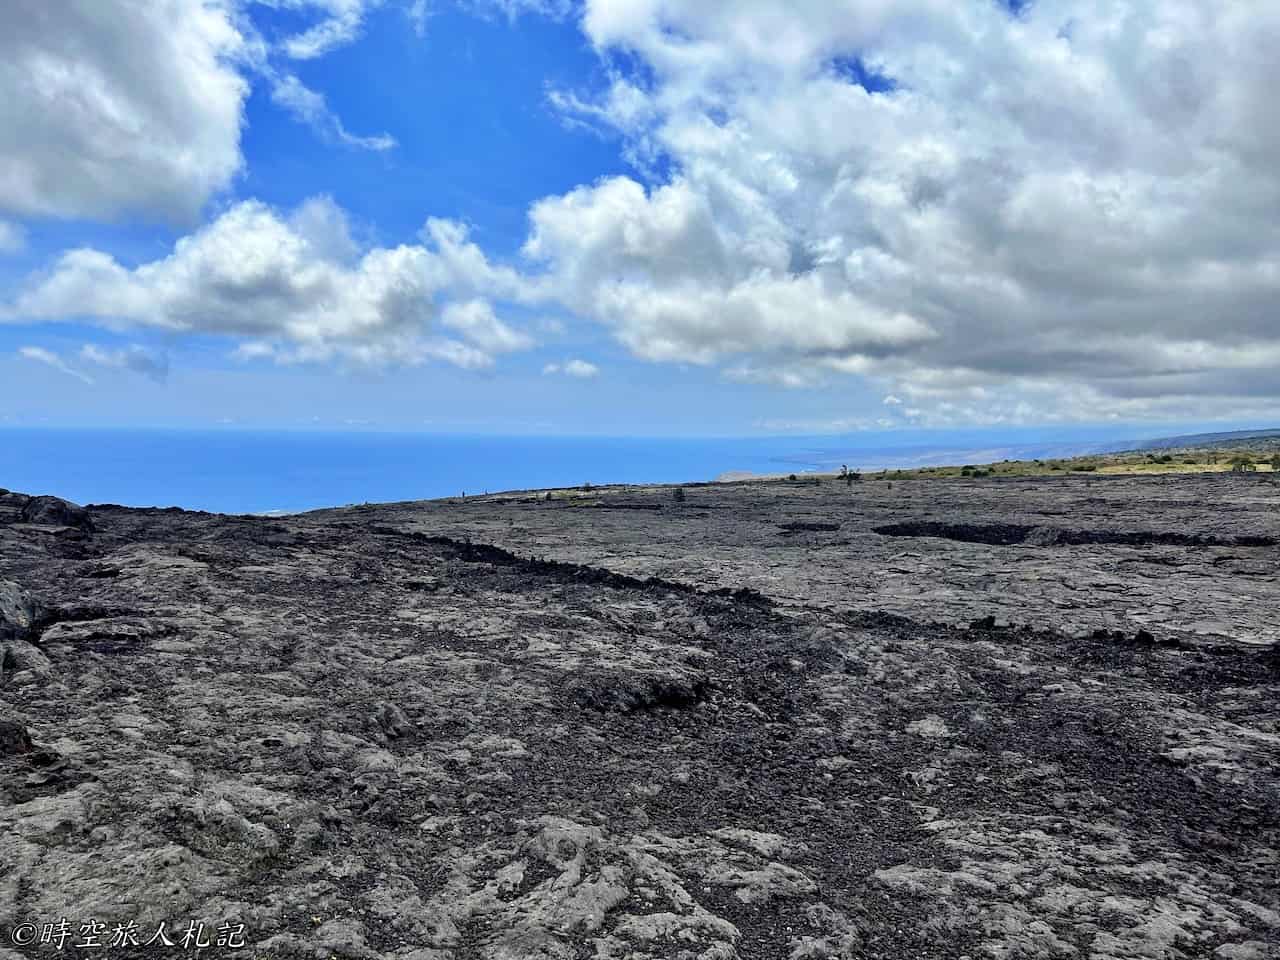 Hawaii volcanos national park,夏威夷火山國家公園 76